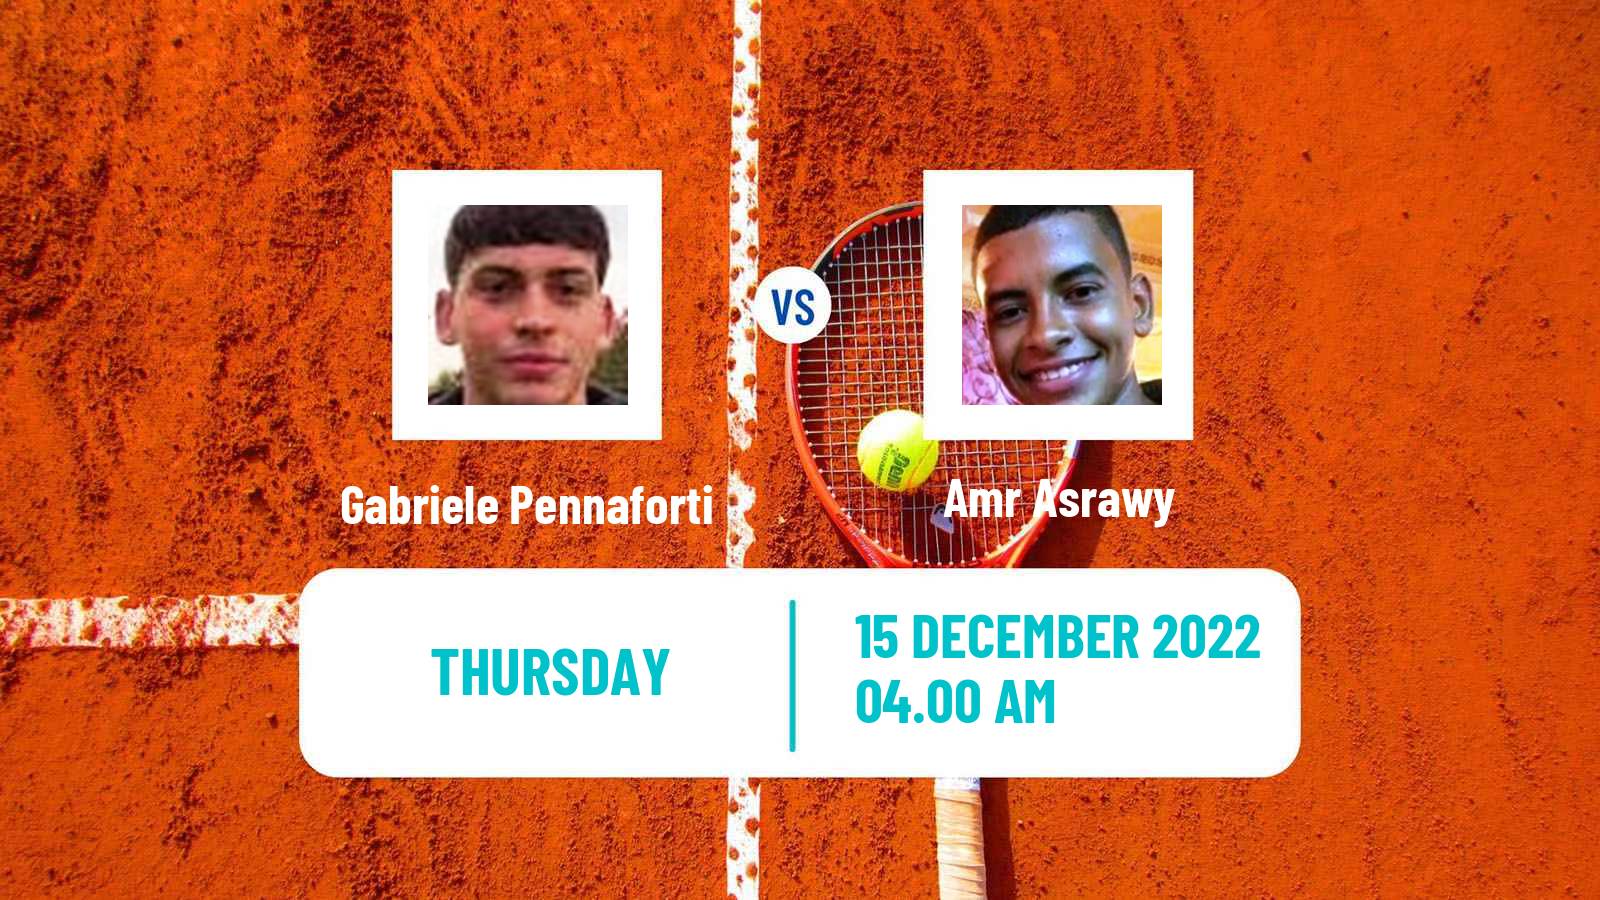 Tennis ITF Tournaments Gabriele Pennaforti - Amr Asrawy